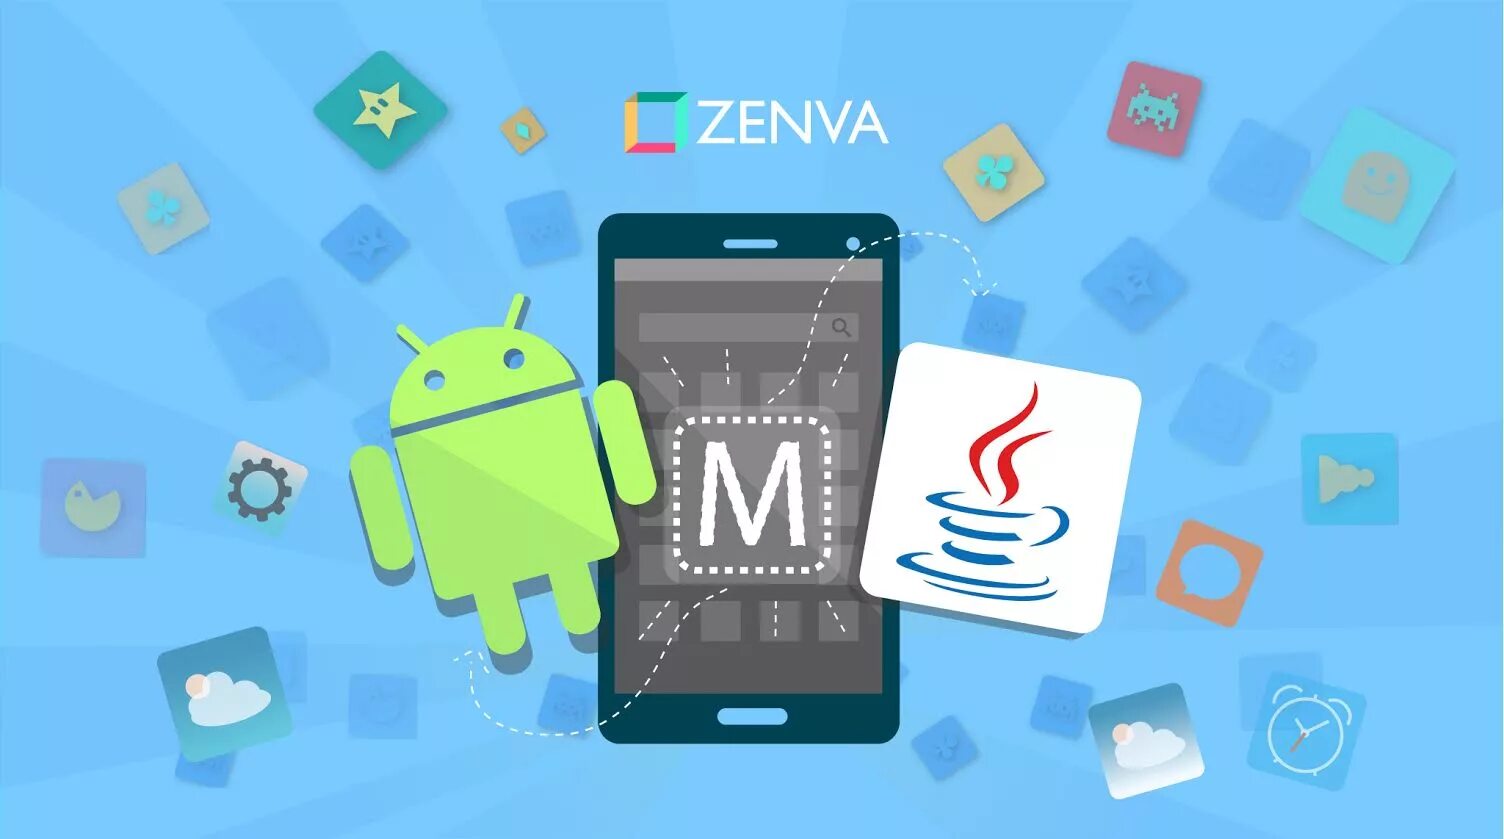 Android programmes. Программирование Android. Андроид джава. Java на андроид. Java + Android: программирование мобильных приложений.